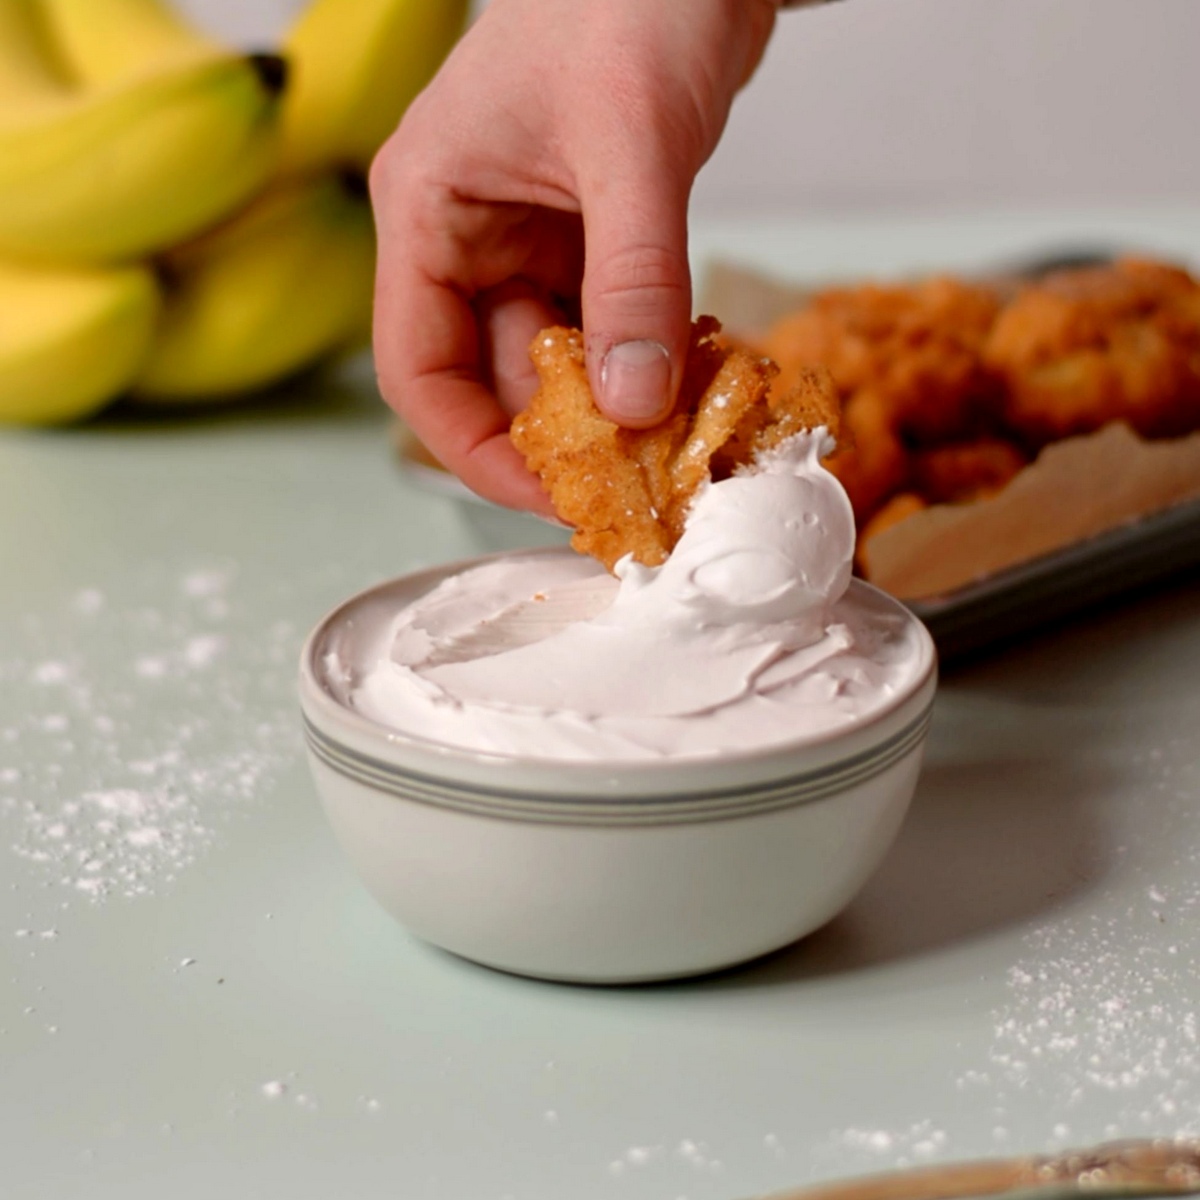 Dipping a fried crispy banana into a coconut cream dip.